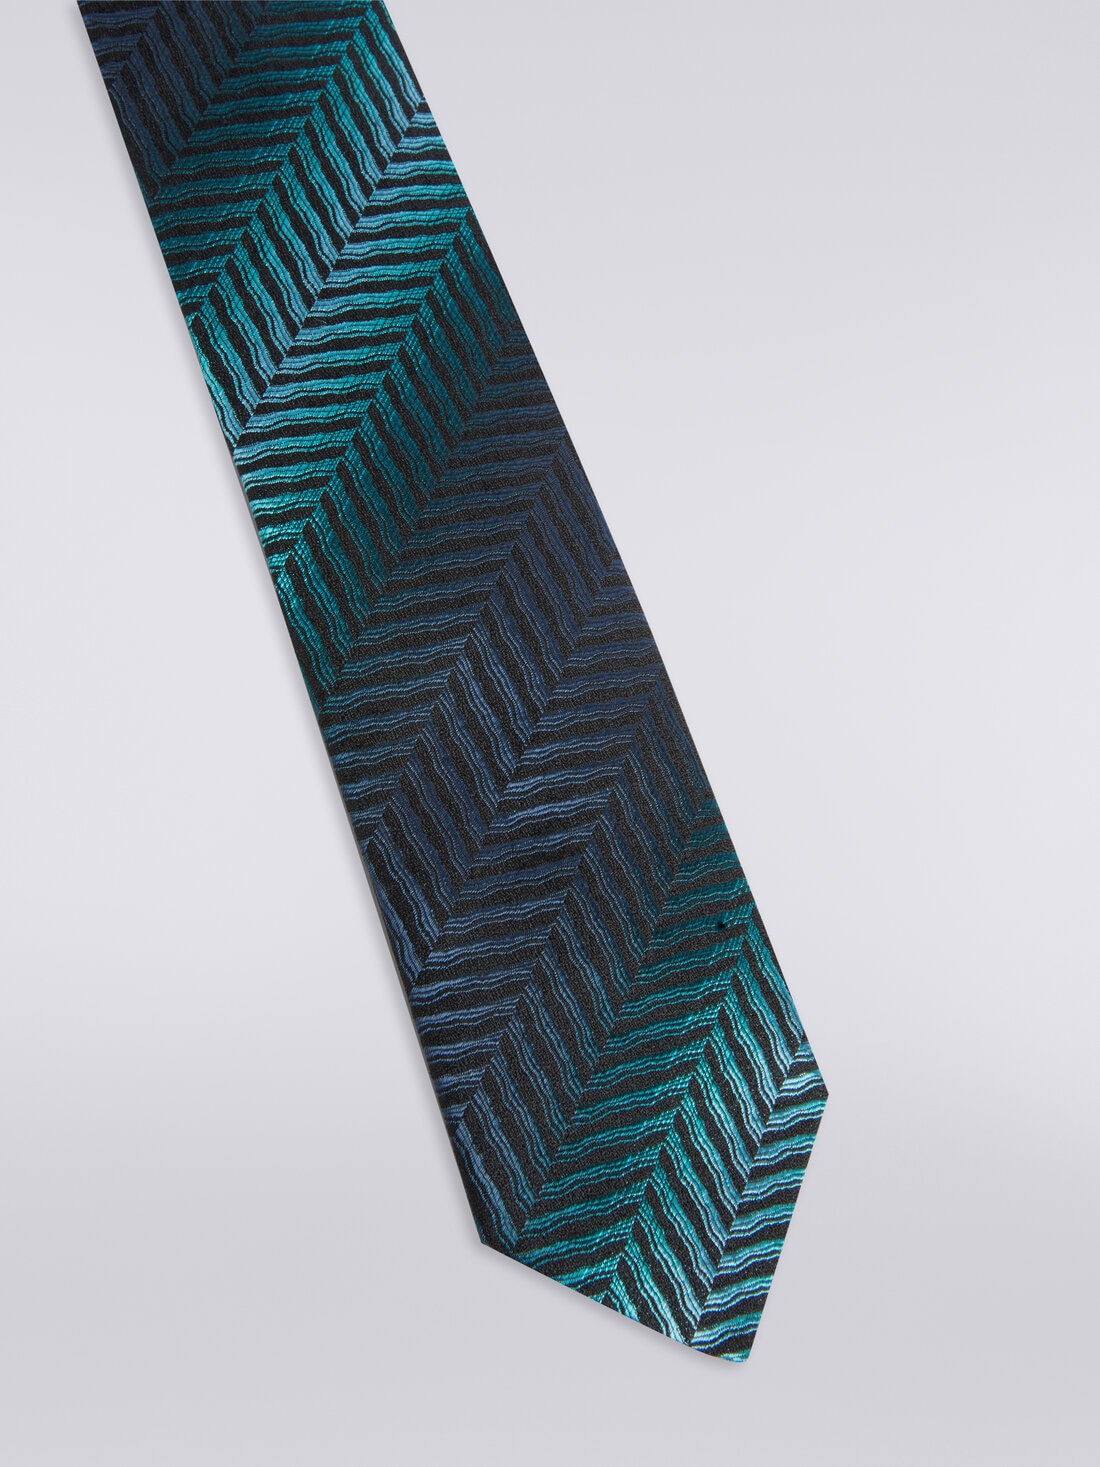 Cravatta in seta, Multicolore  - 8053147023410 - 1